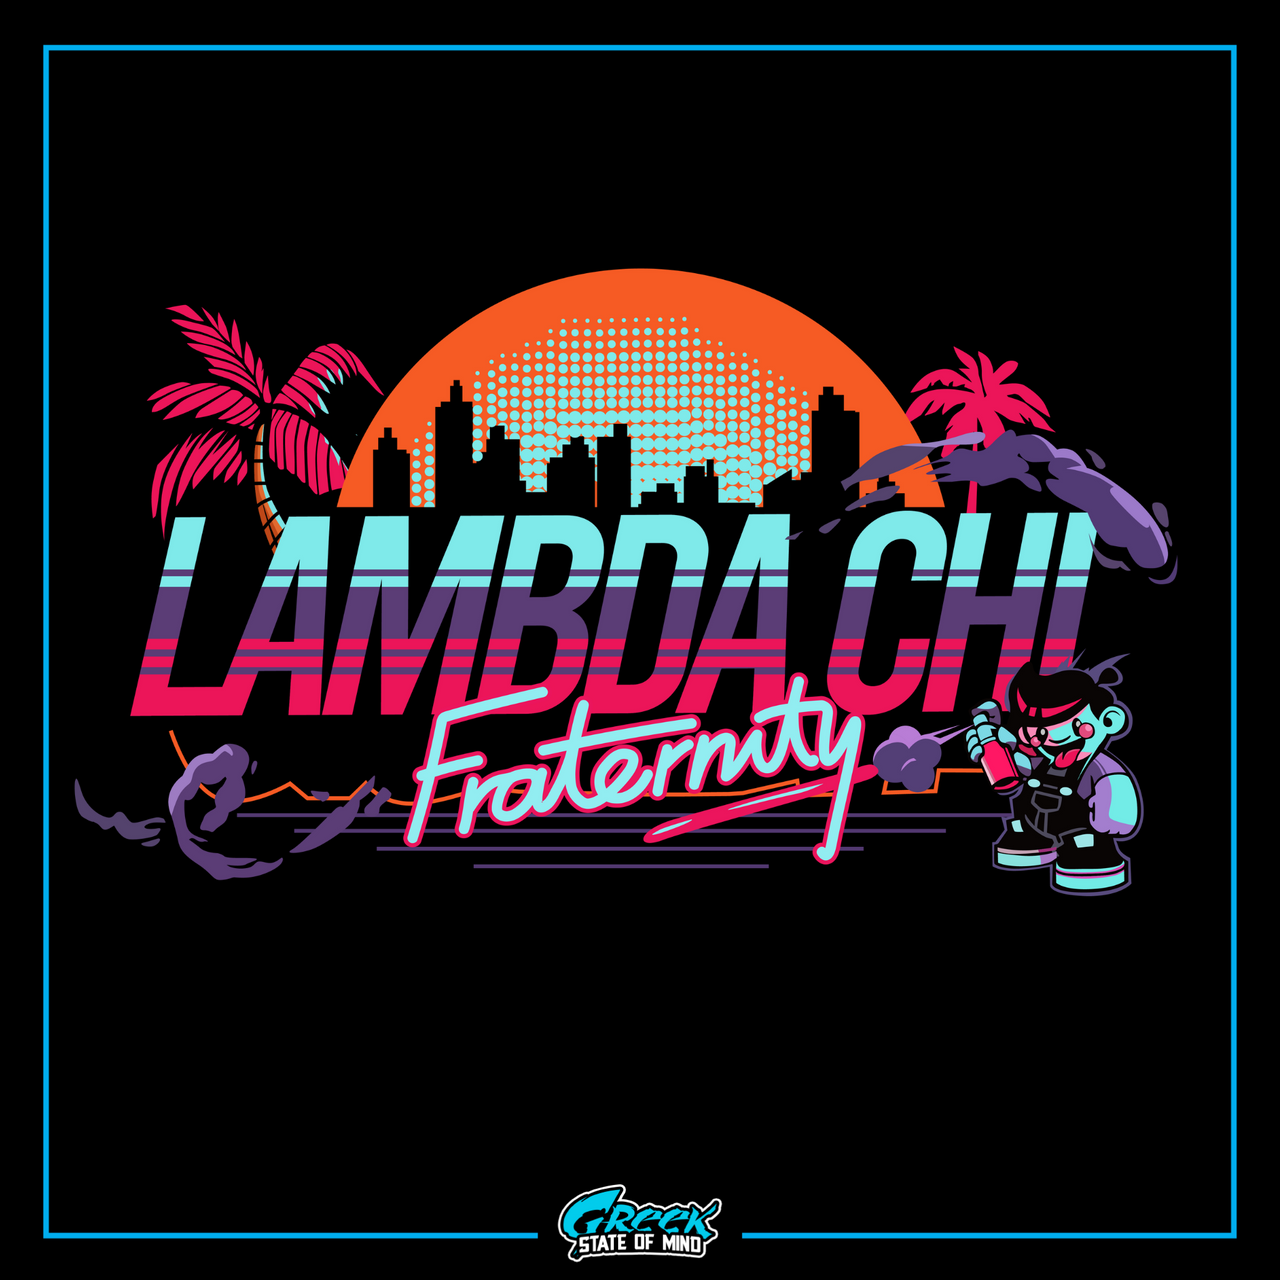 Lambda Chi Alpha Graphic Crewneck Sweatshirt | Jump Street | Lambda Chi Alpha Fraternity Apparel design 